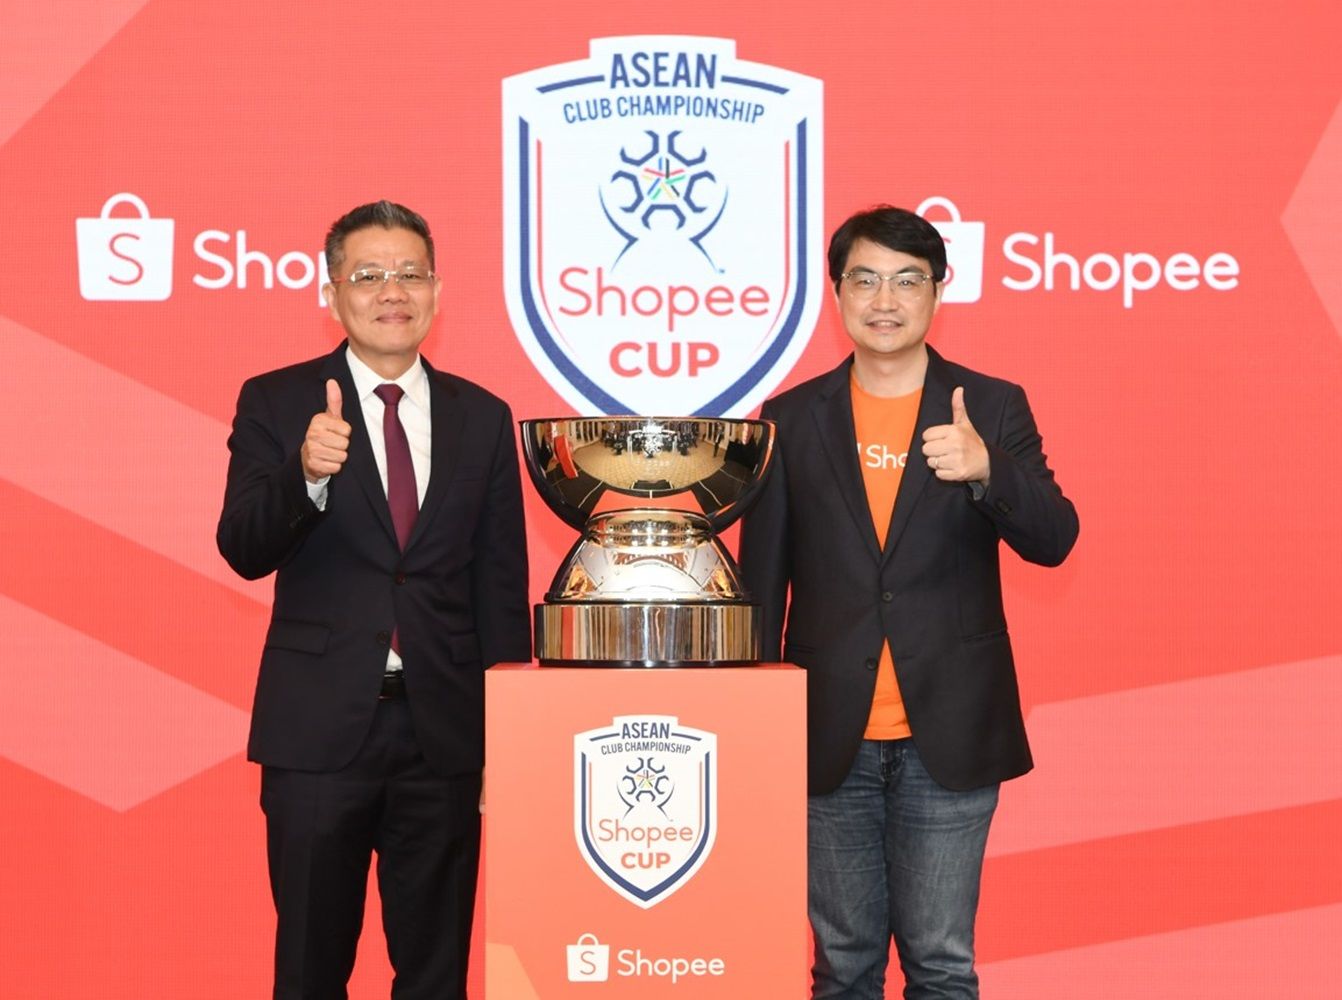 Shopee dan ASEAN Football Federation atau Federasi Sepak Bola ASEAN (AFF) berkolaborasi menyelenggarakan Shopee Cup ASEAN Club Championship